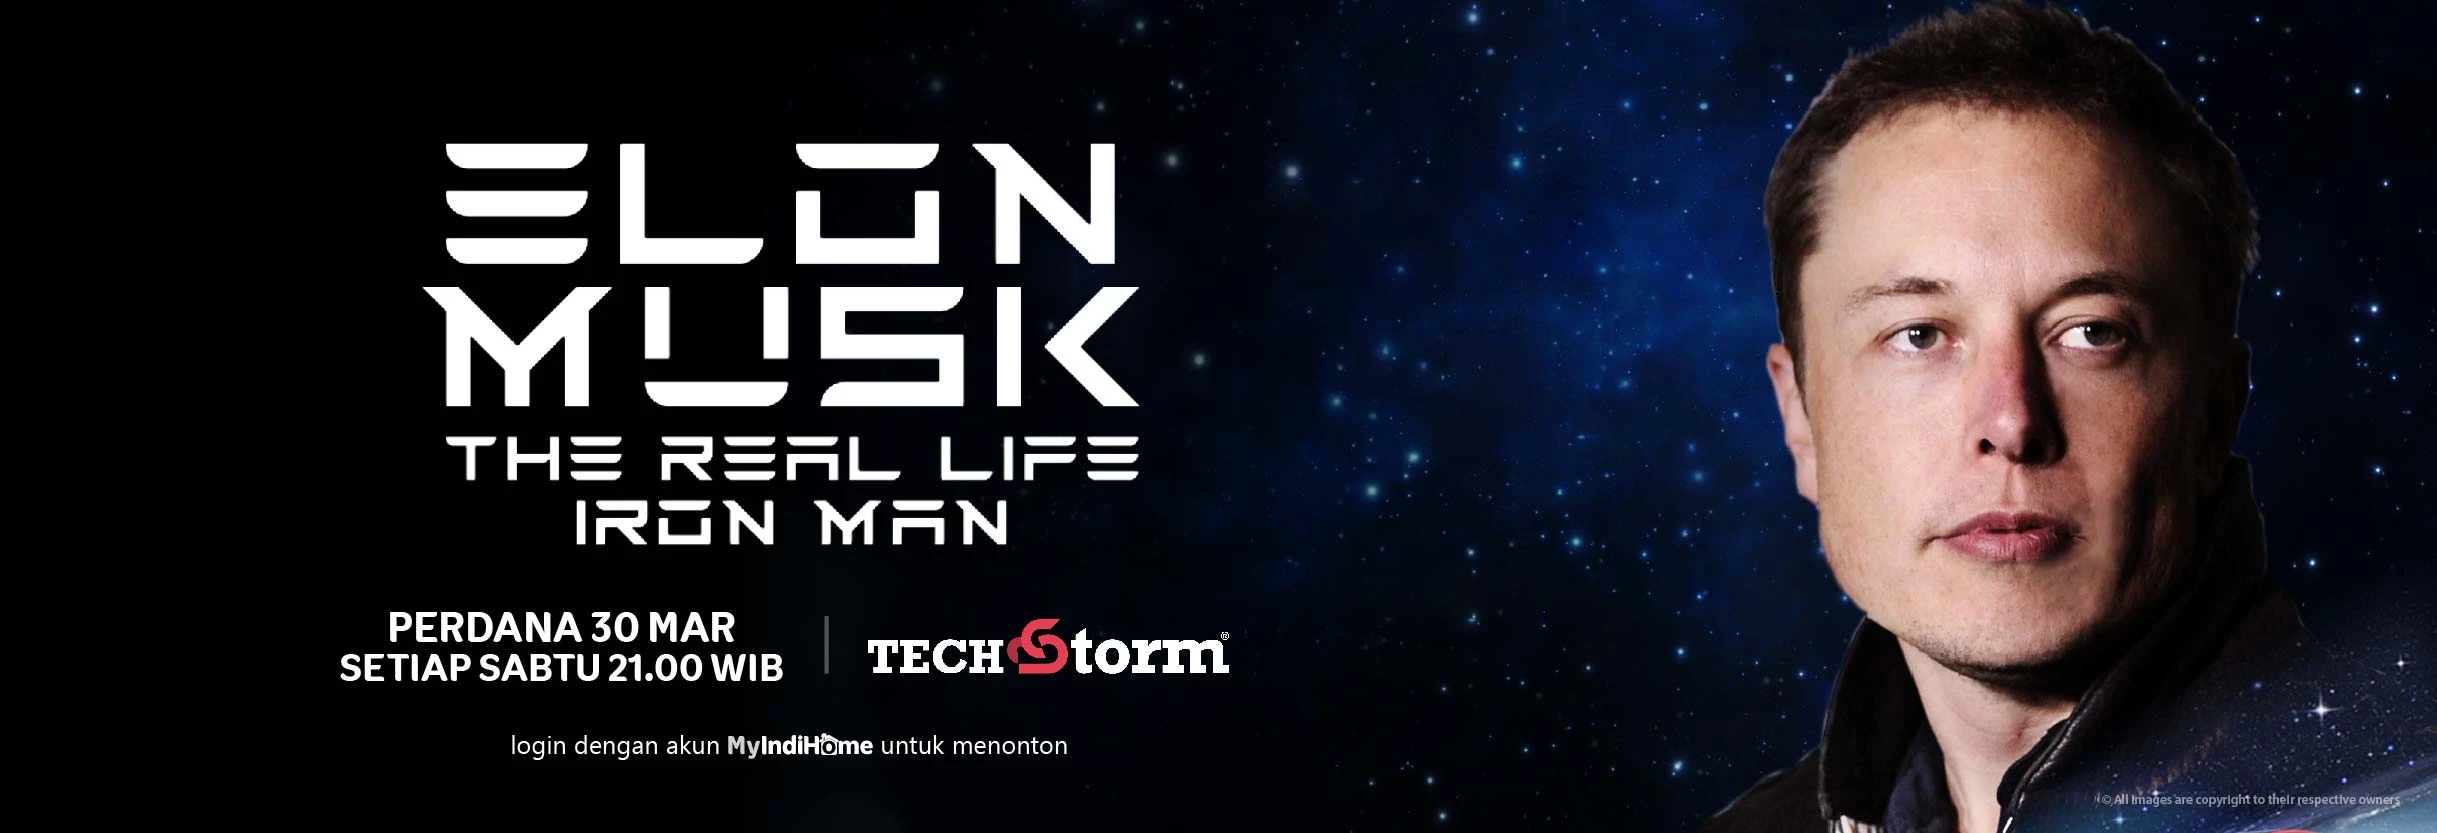 Elon Musk The Real Life Iron Man